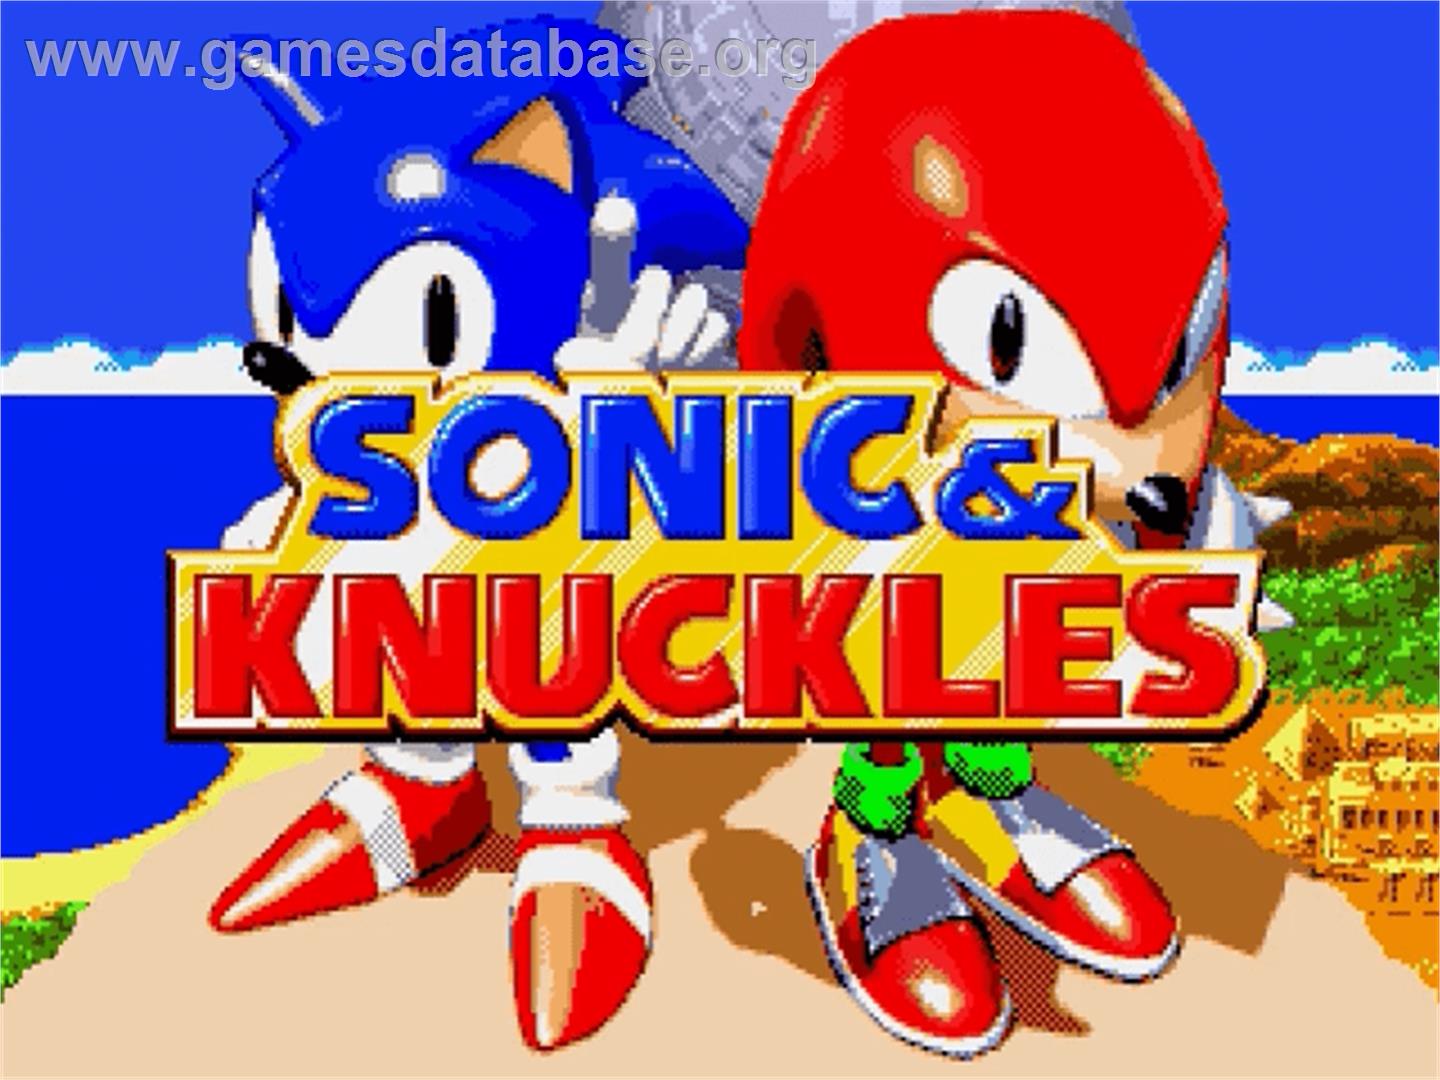 Sonic and Knuckles - Sega Genesis - Artwork - Title Screen